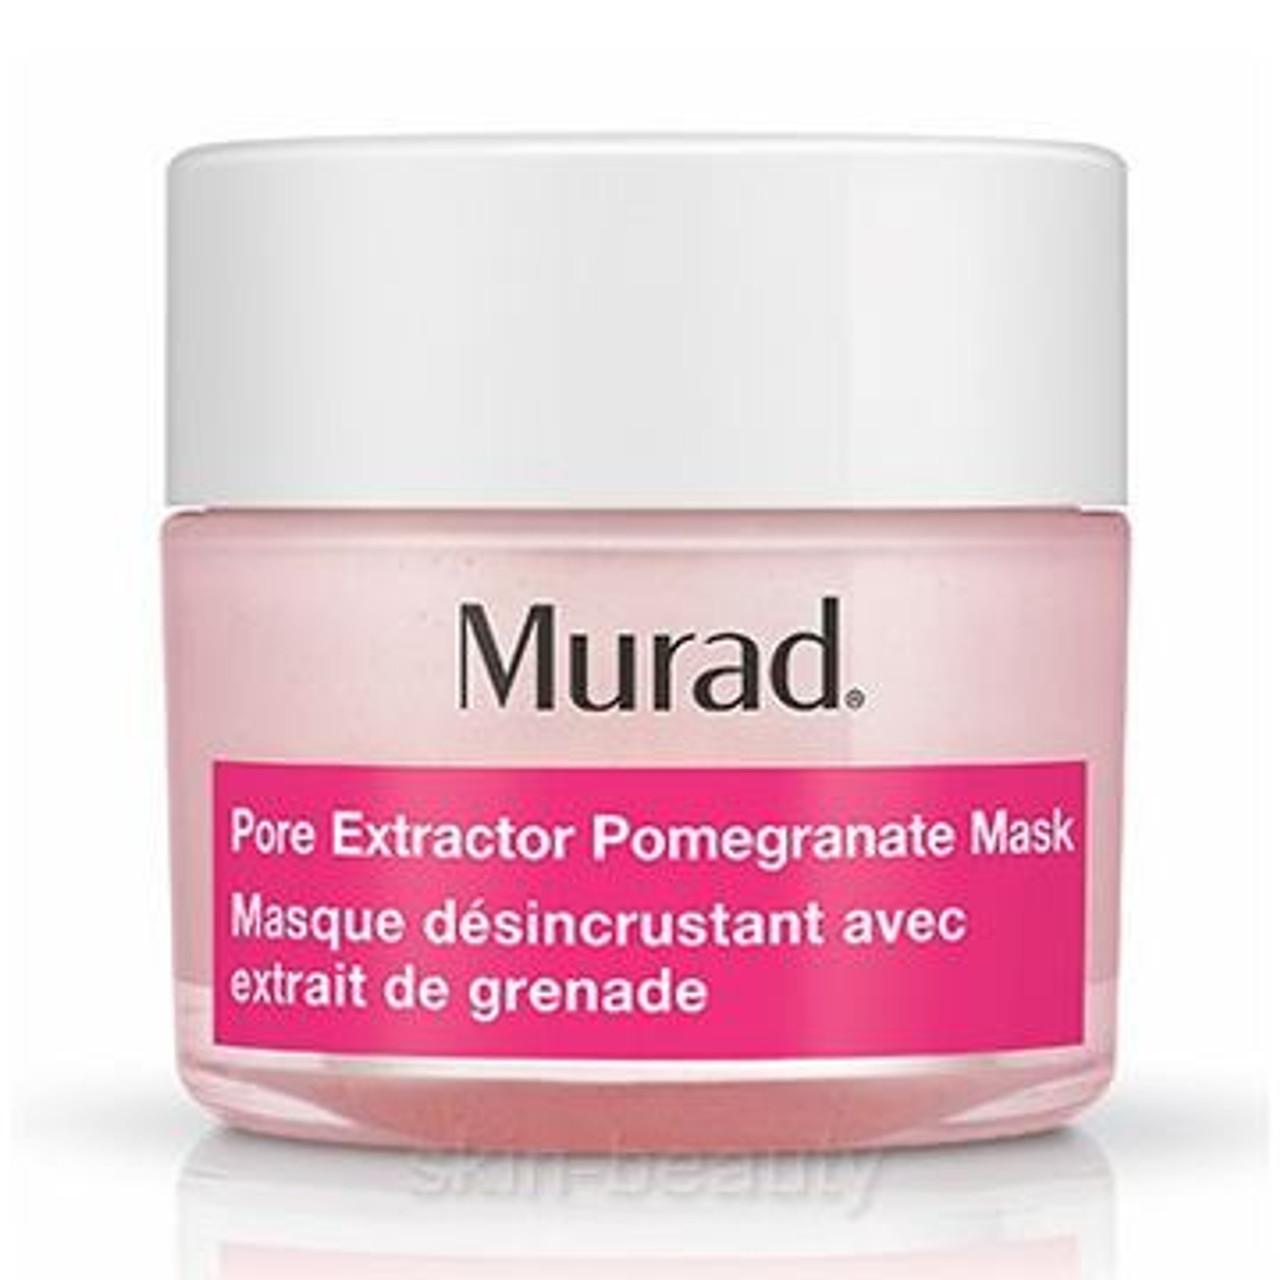 Murad Pore Extractor Pomegranate Mask - 1.7 oz